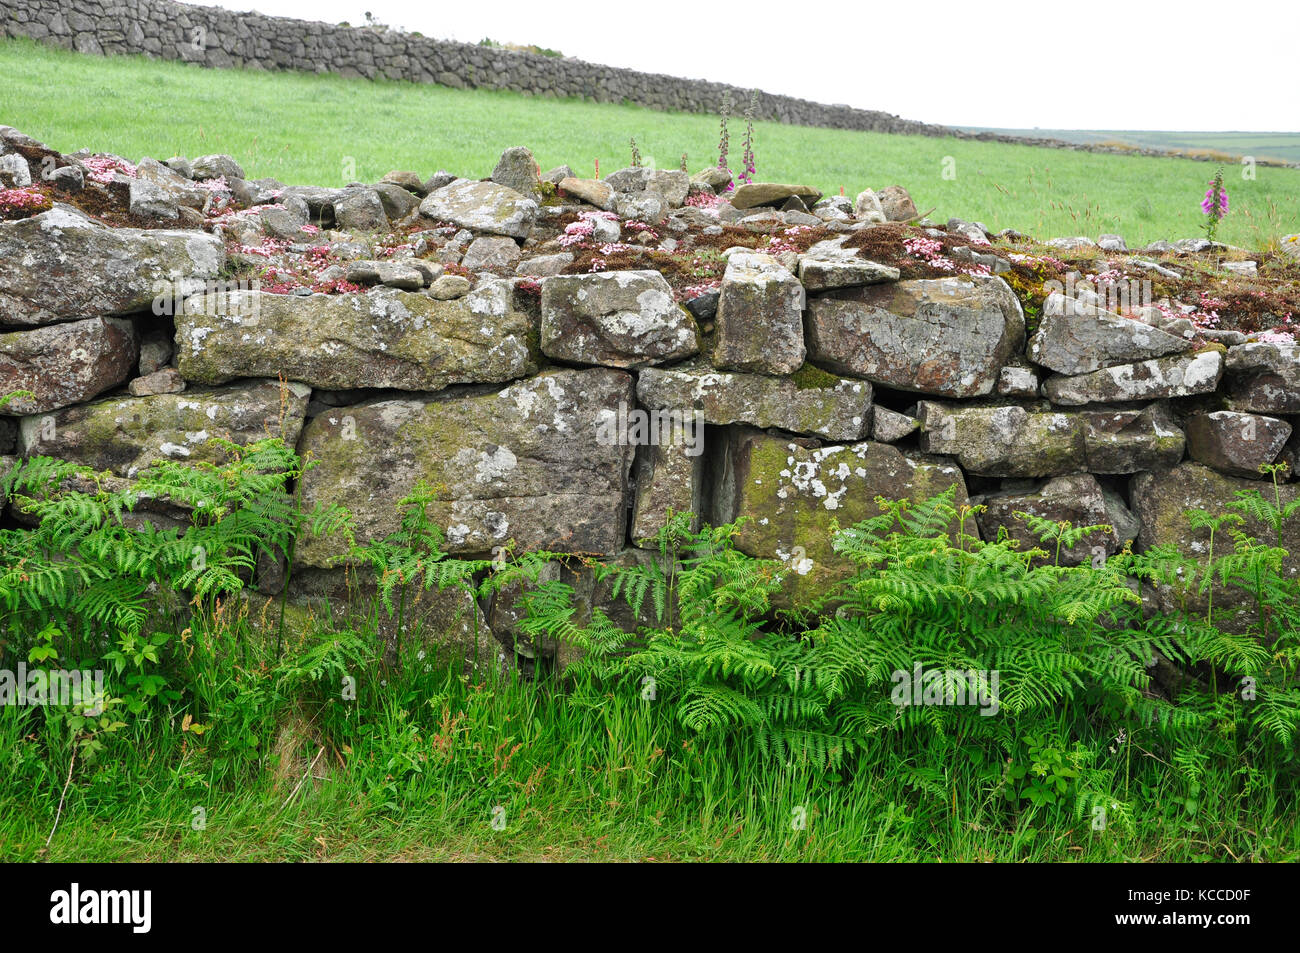 Granite wall. Lichen, stone crop and moss covered.Small animal habitat.Cornwall. UK. Stock Photo